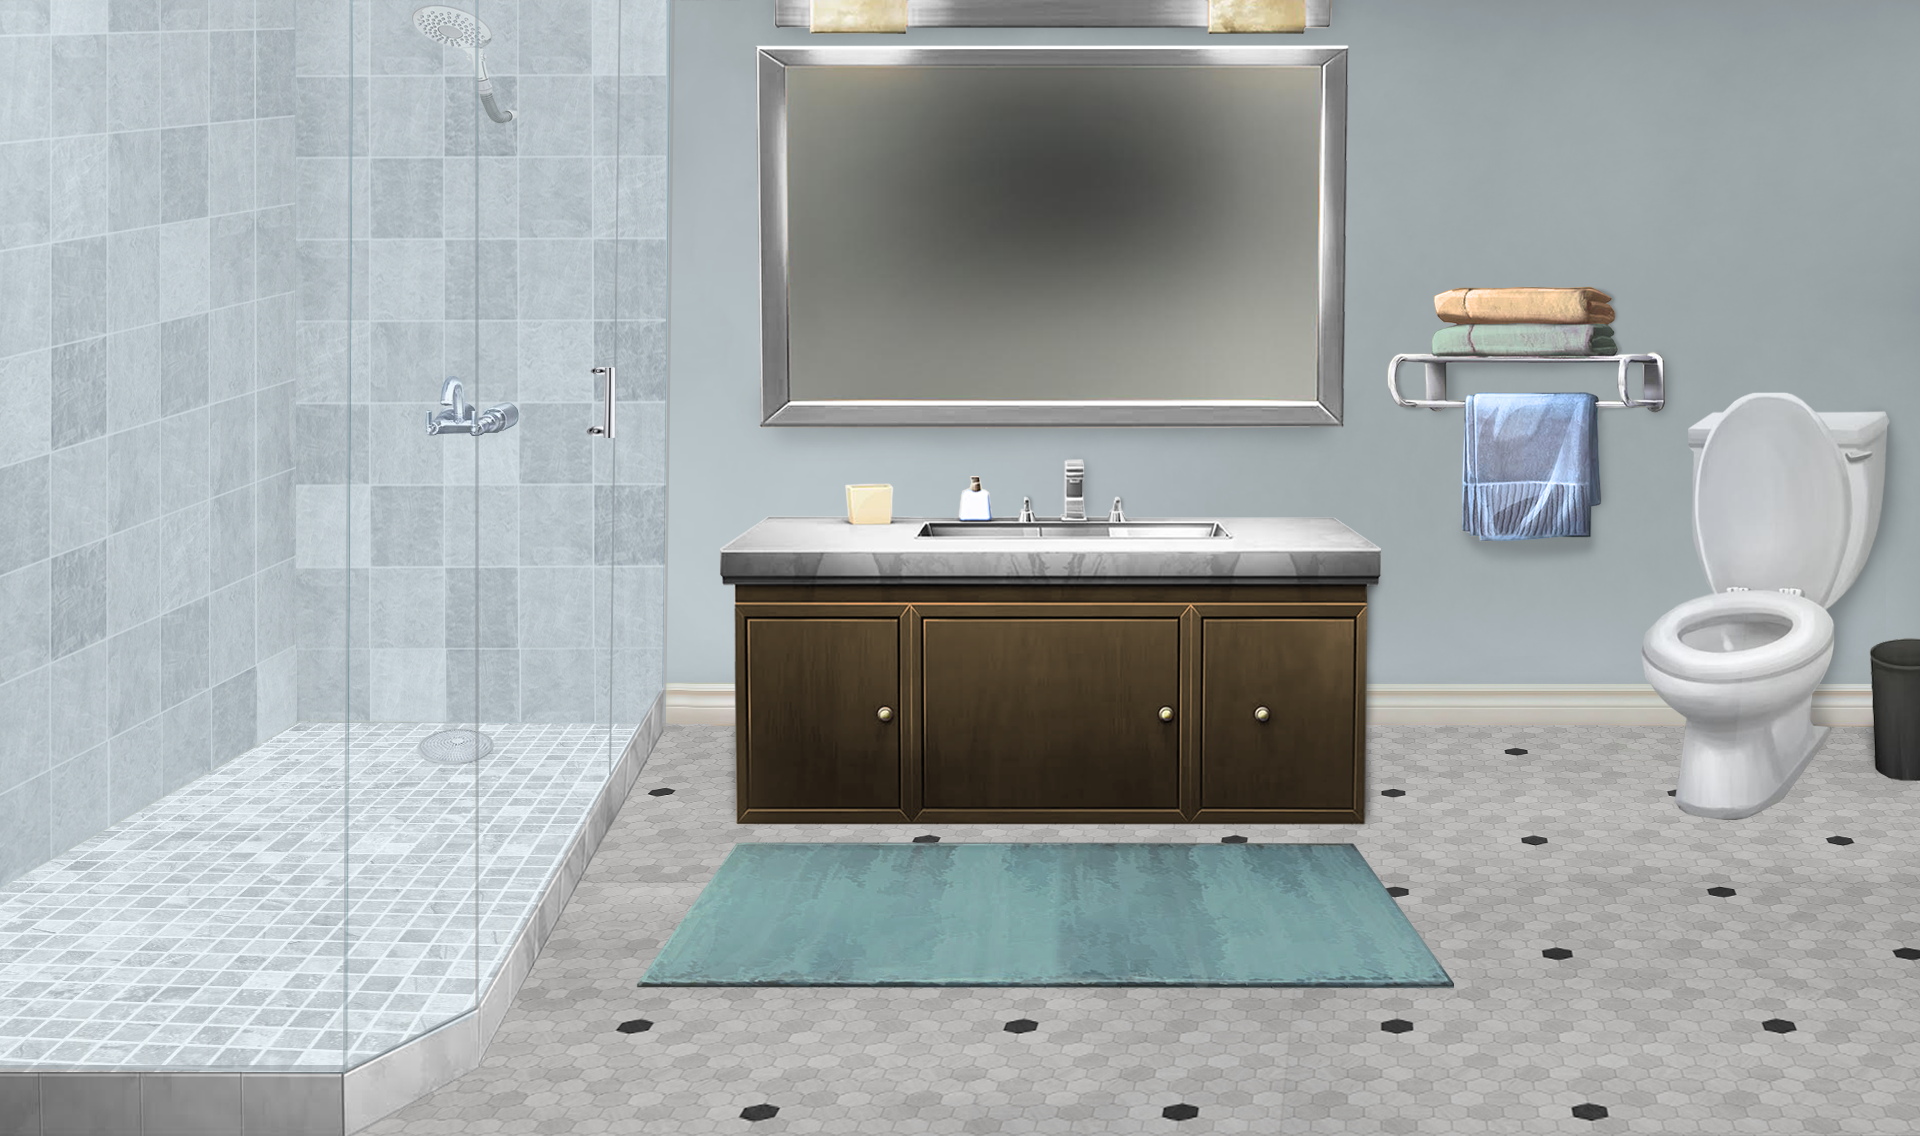 Background Bathrooms ideas. episode interactive background, episode background, anime background